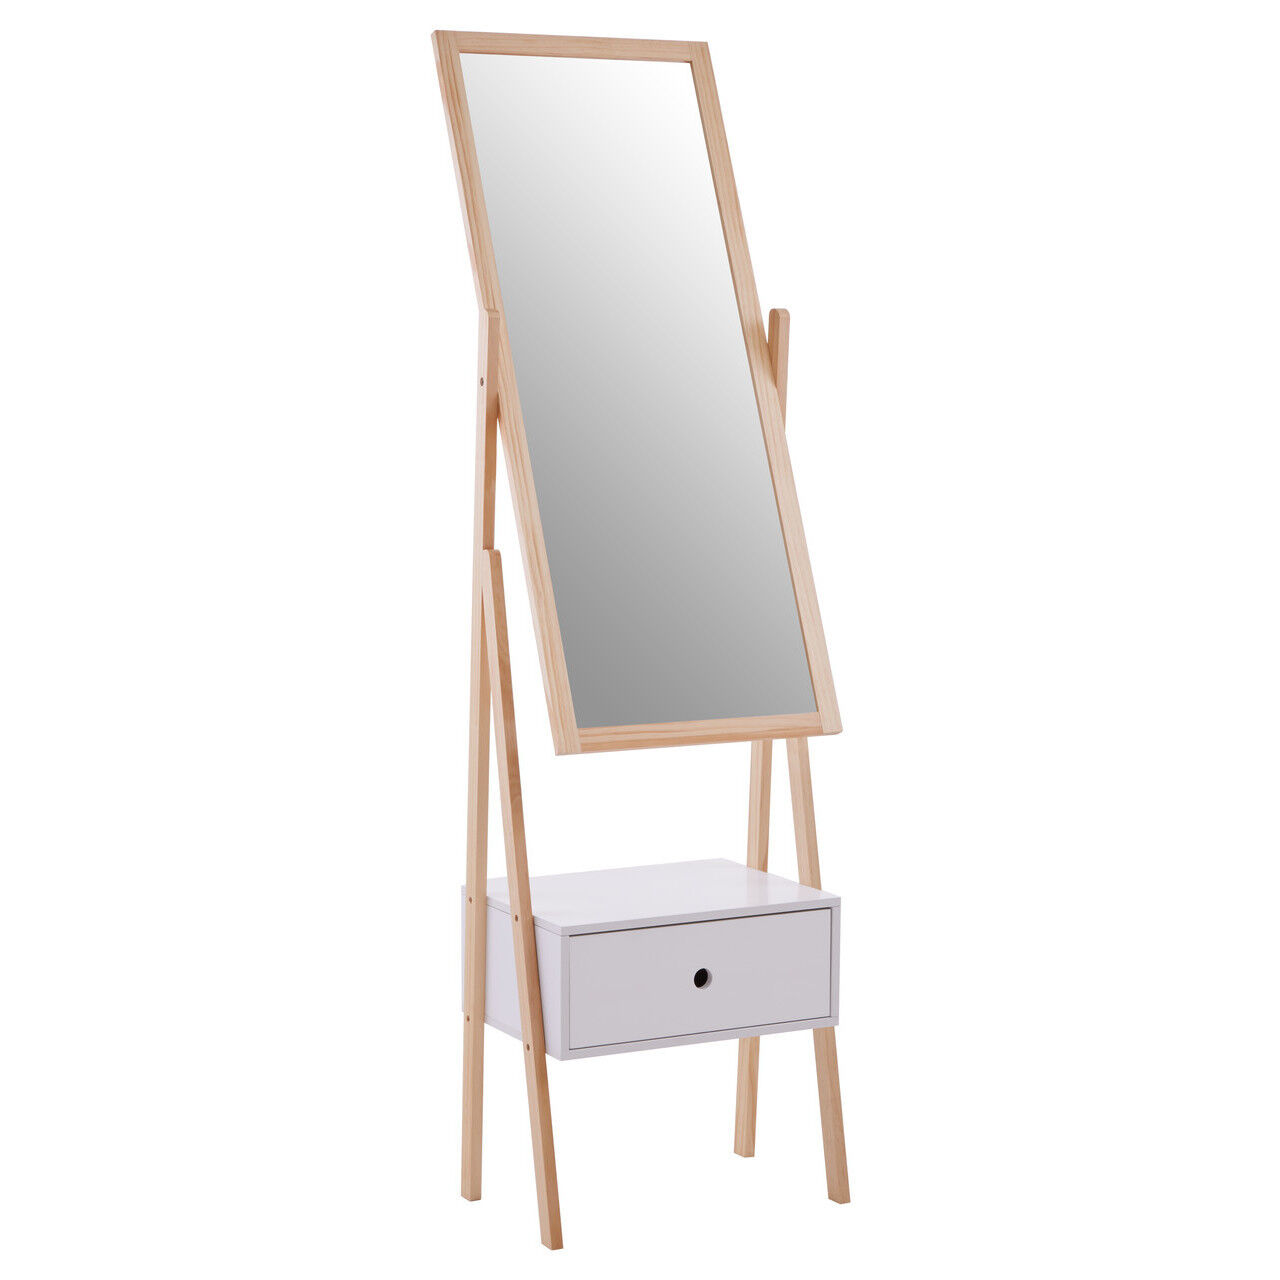 Stuttgart 1 Drawer Mirror Stand   White    Pine Wood Frame